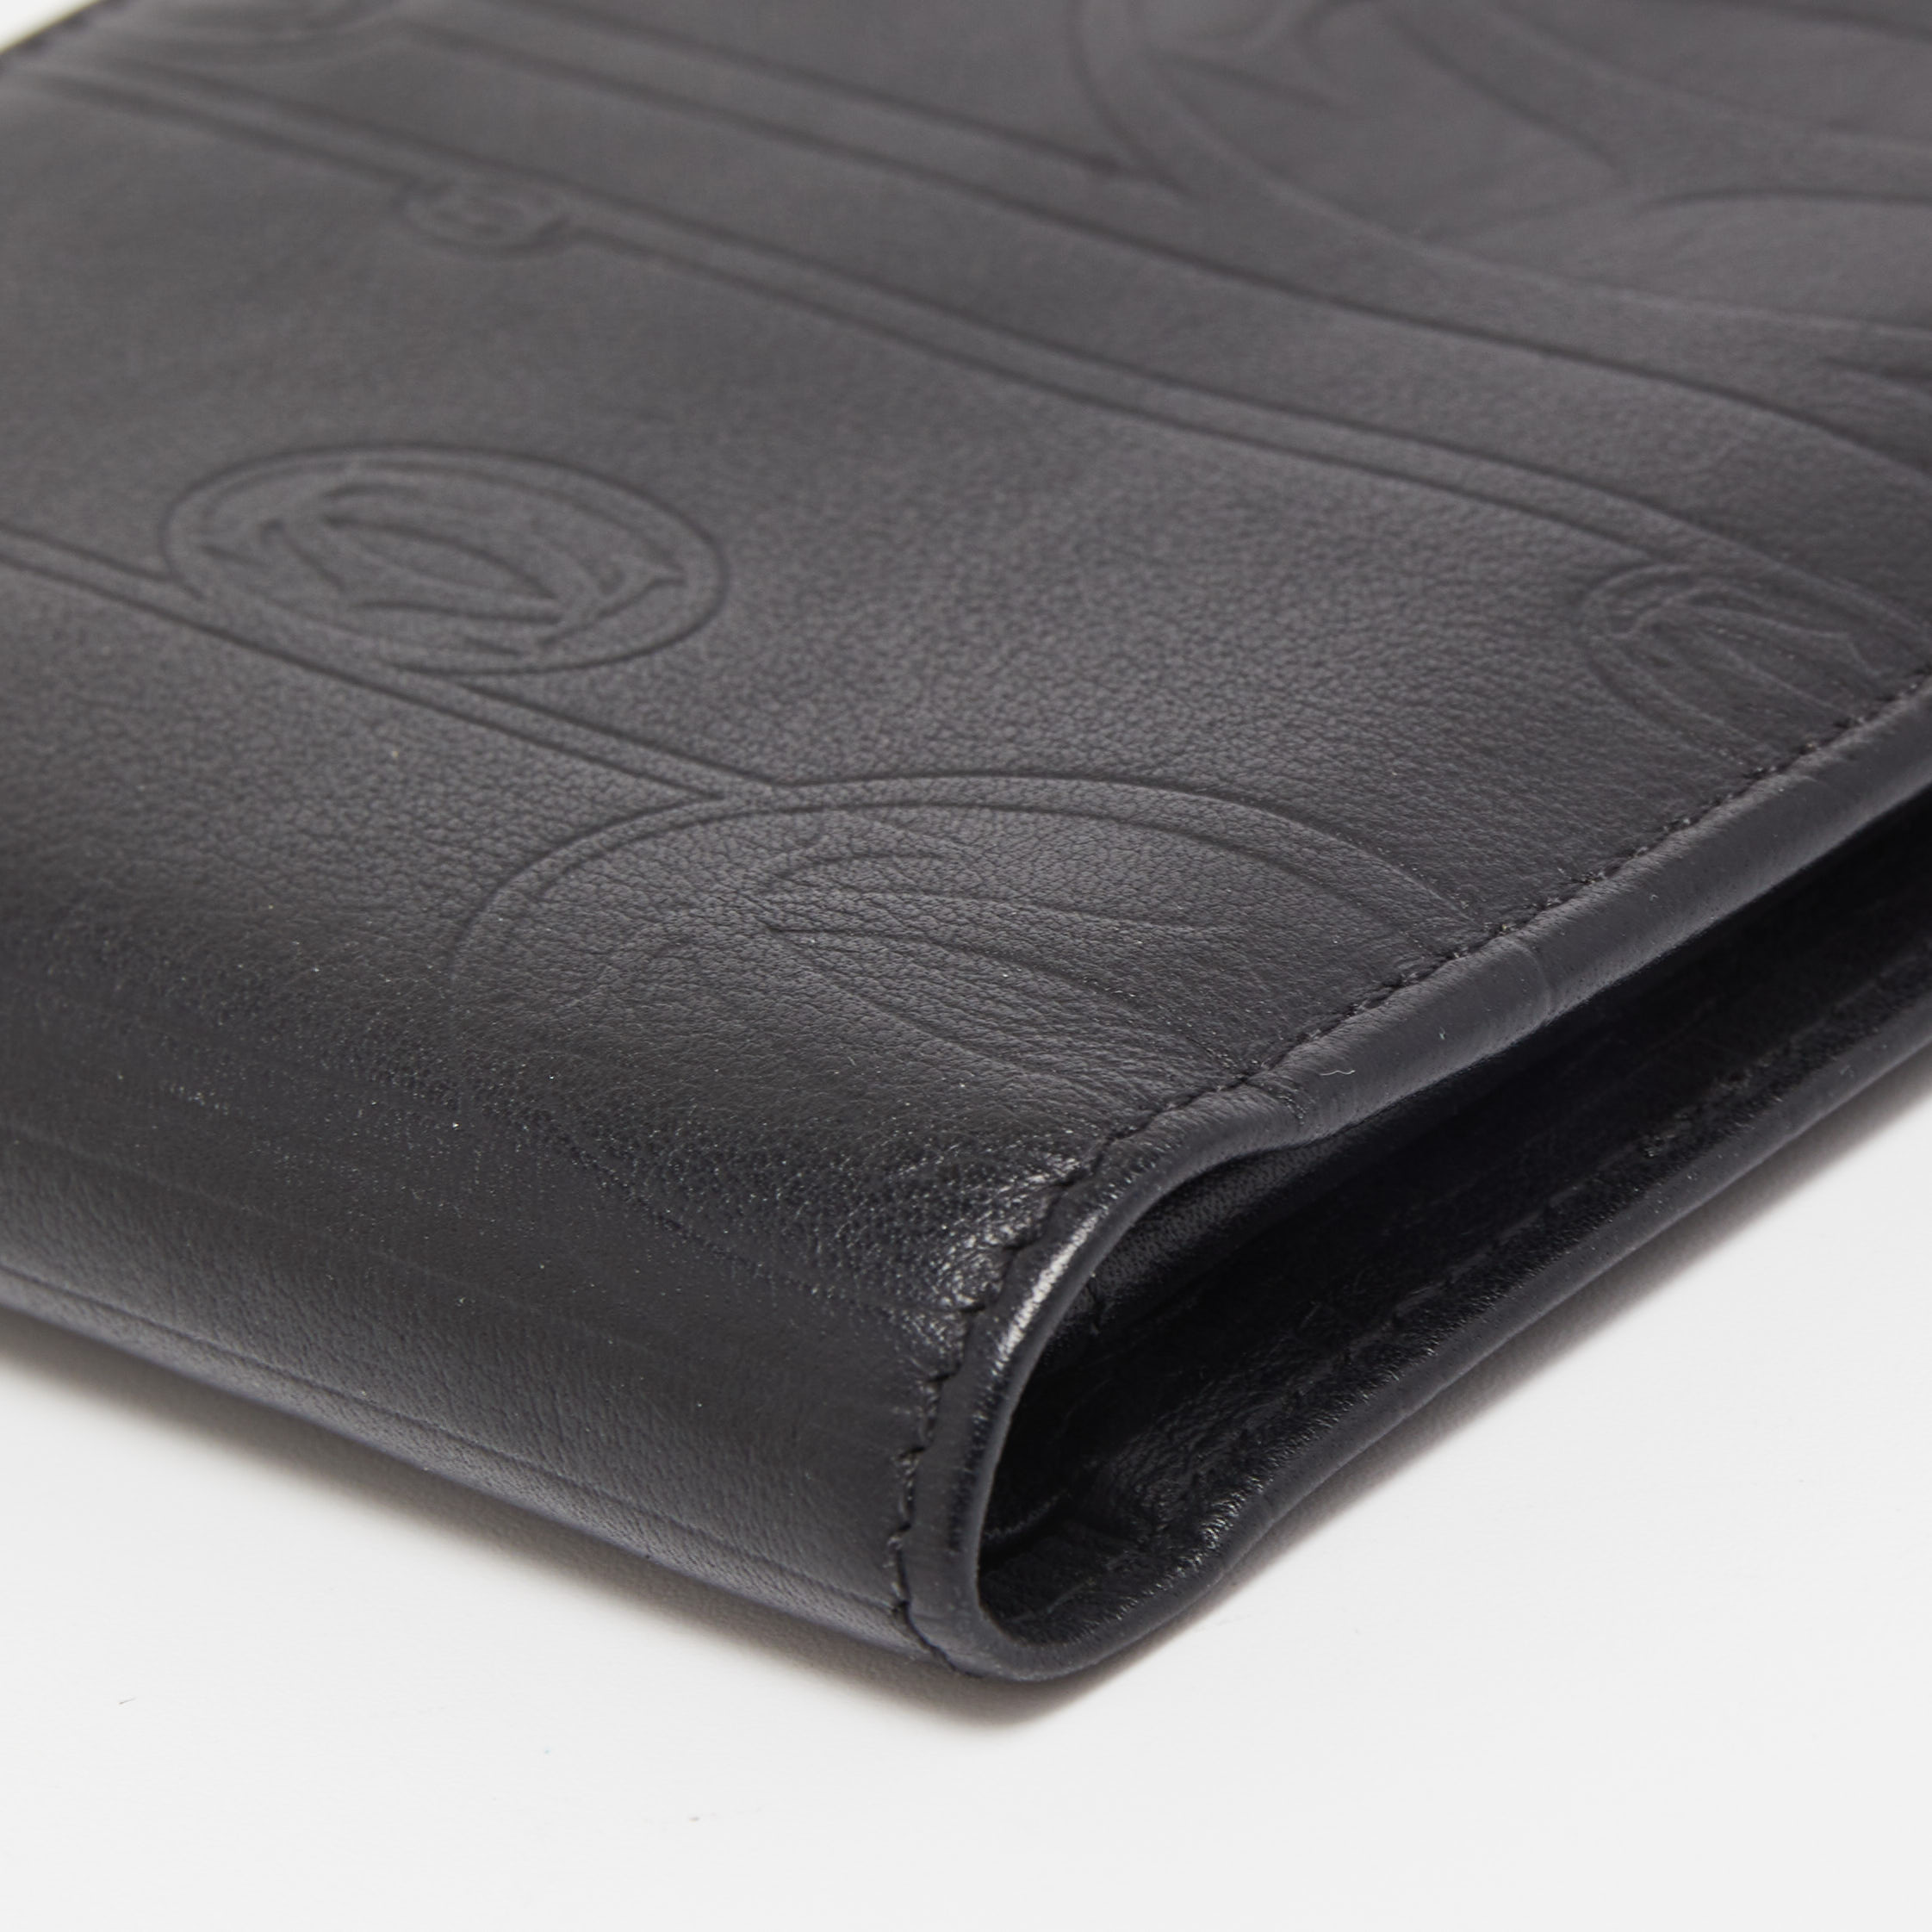 Cartier Black Leather Bifold Wallet